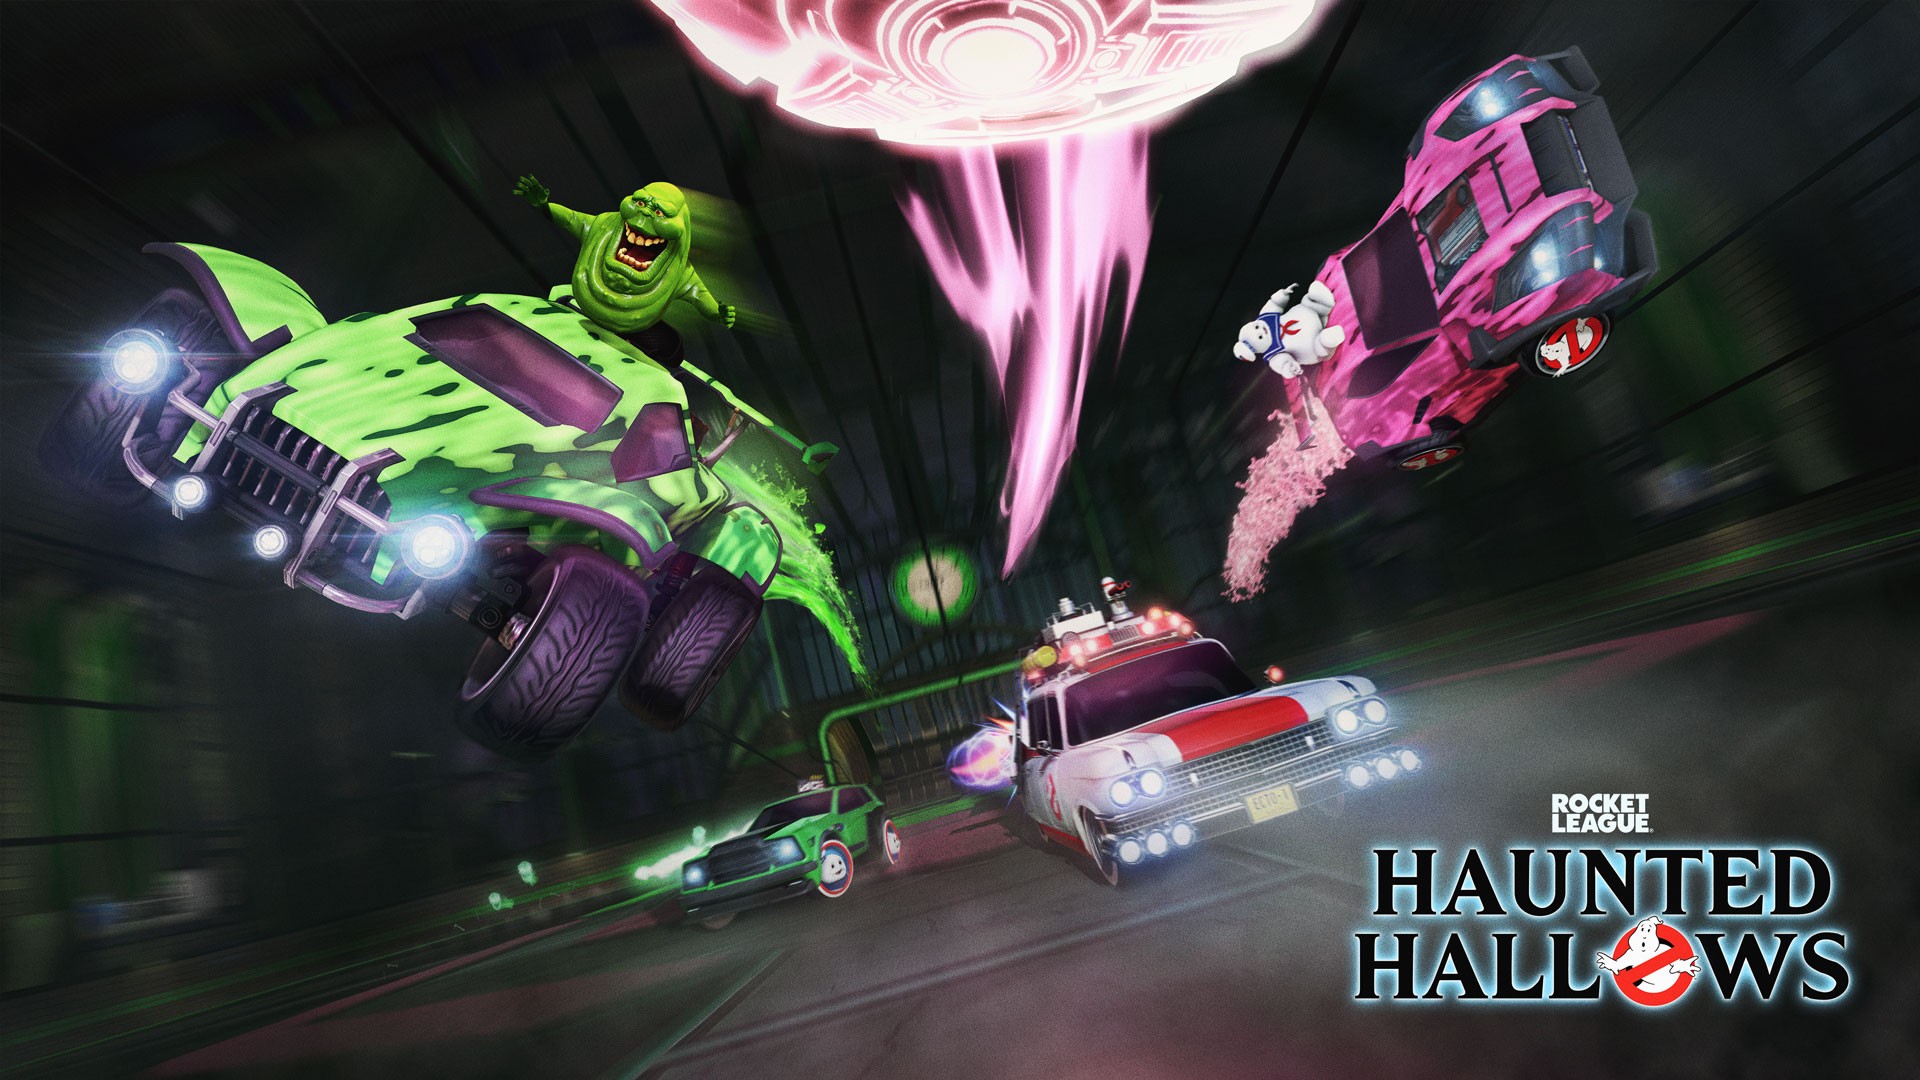 Rocket League's Haunted Hallows